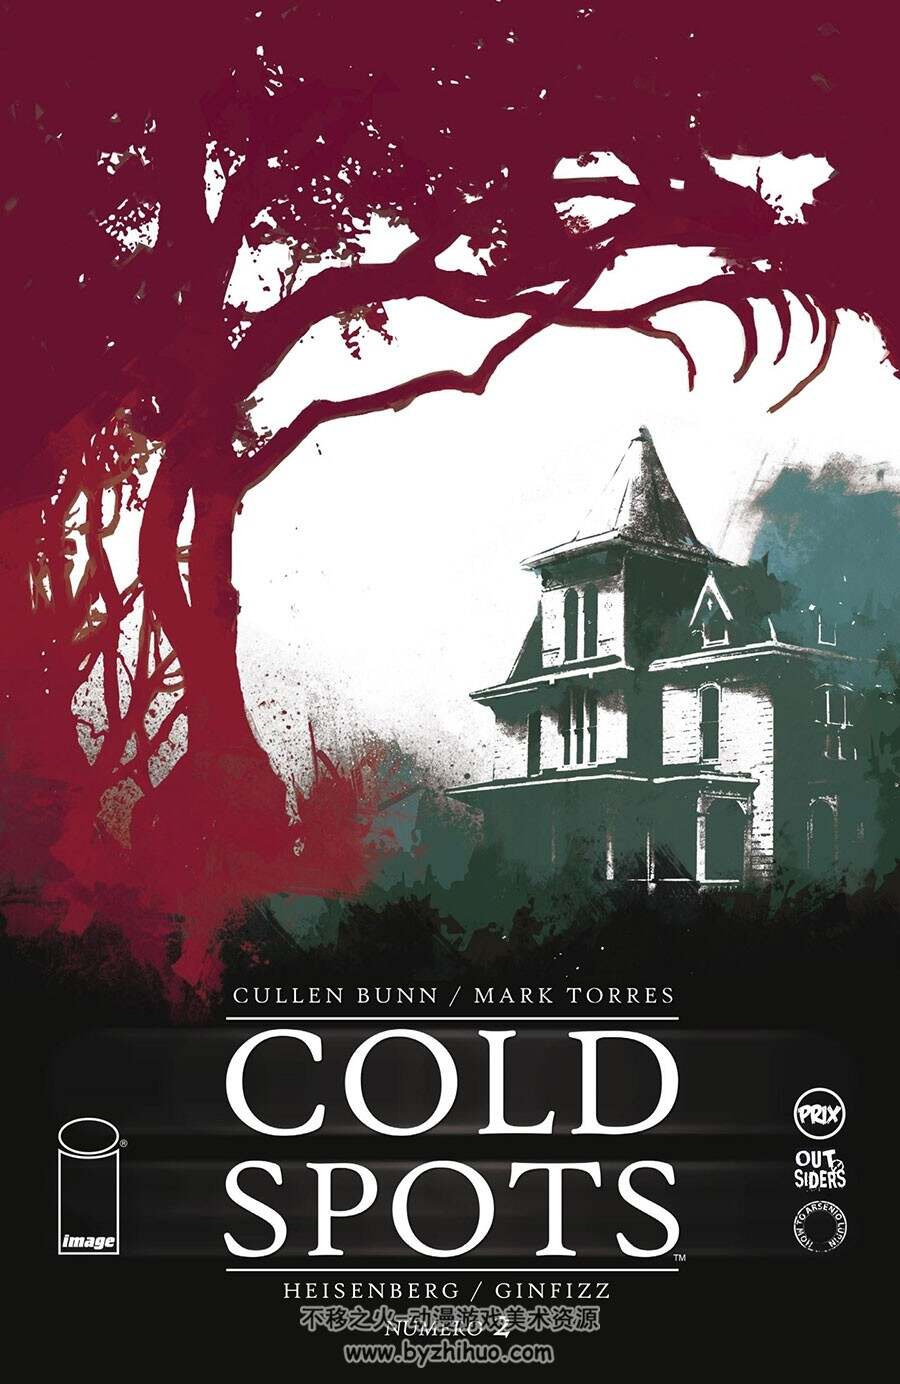 Cold Spots 1-5册 Cullen Bunn - Mark Torres  手绘风西班牙语漫画